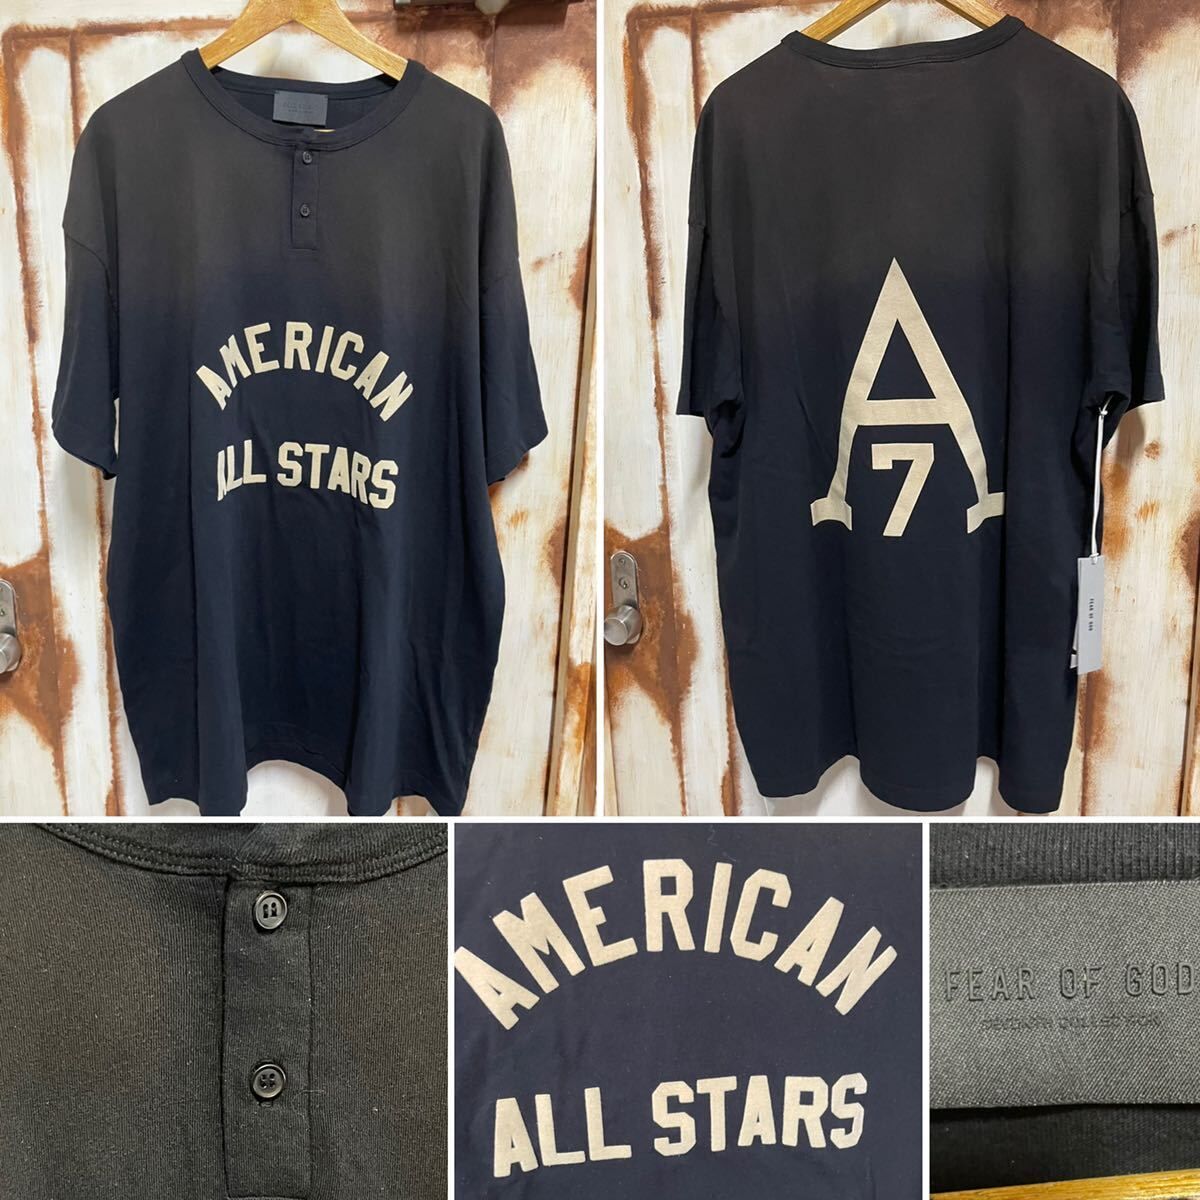 Fear of God AMERICAN ALL STARS Tシャツ